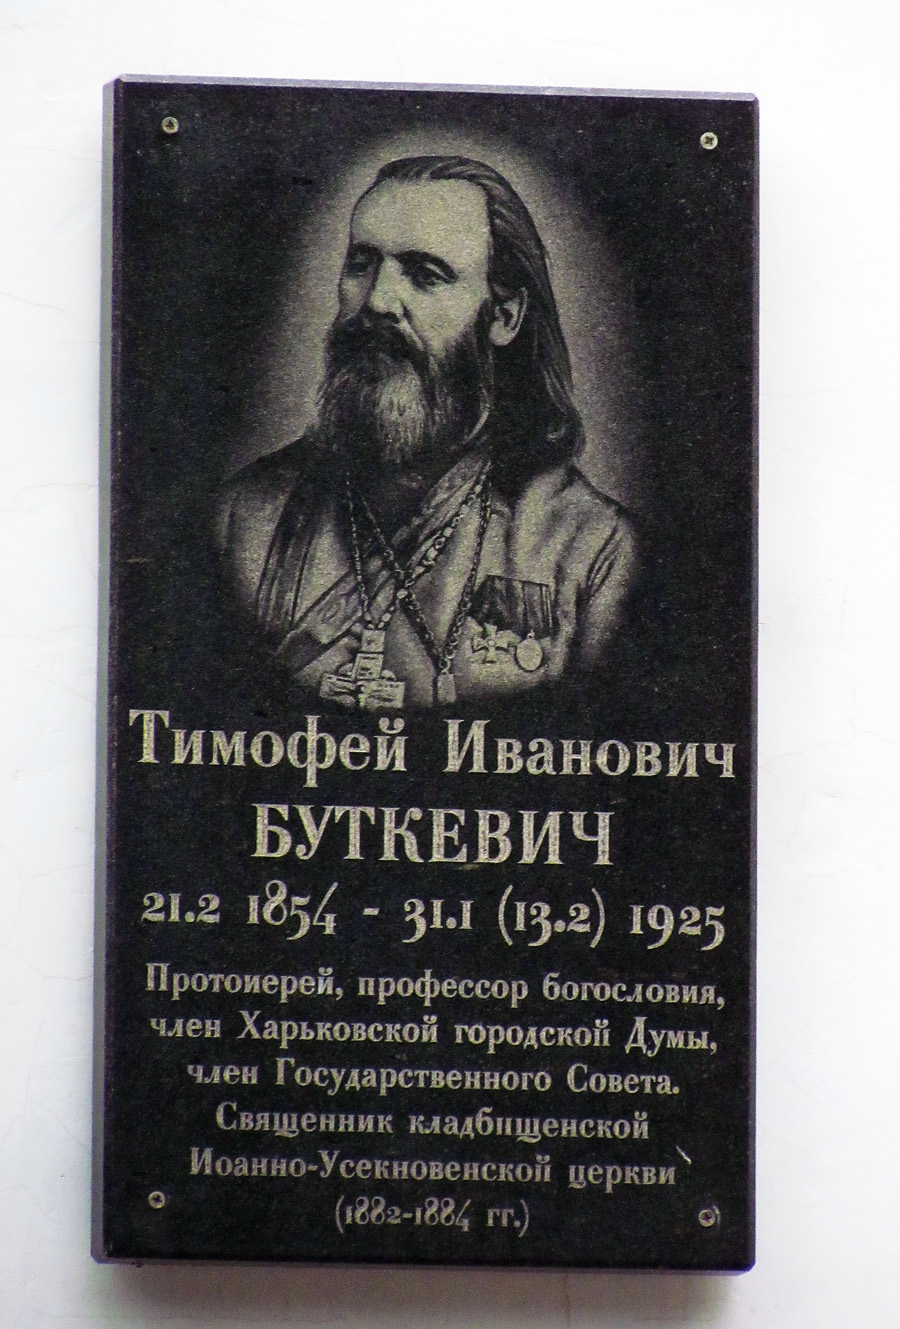 Charków, Улица Алчевских, 50. Charków — Memorial plaques